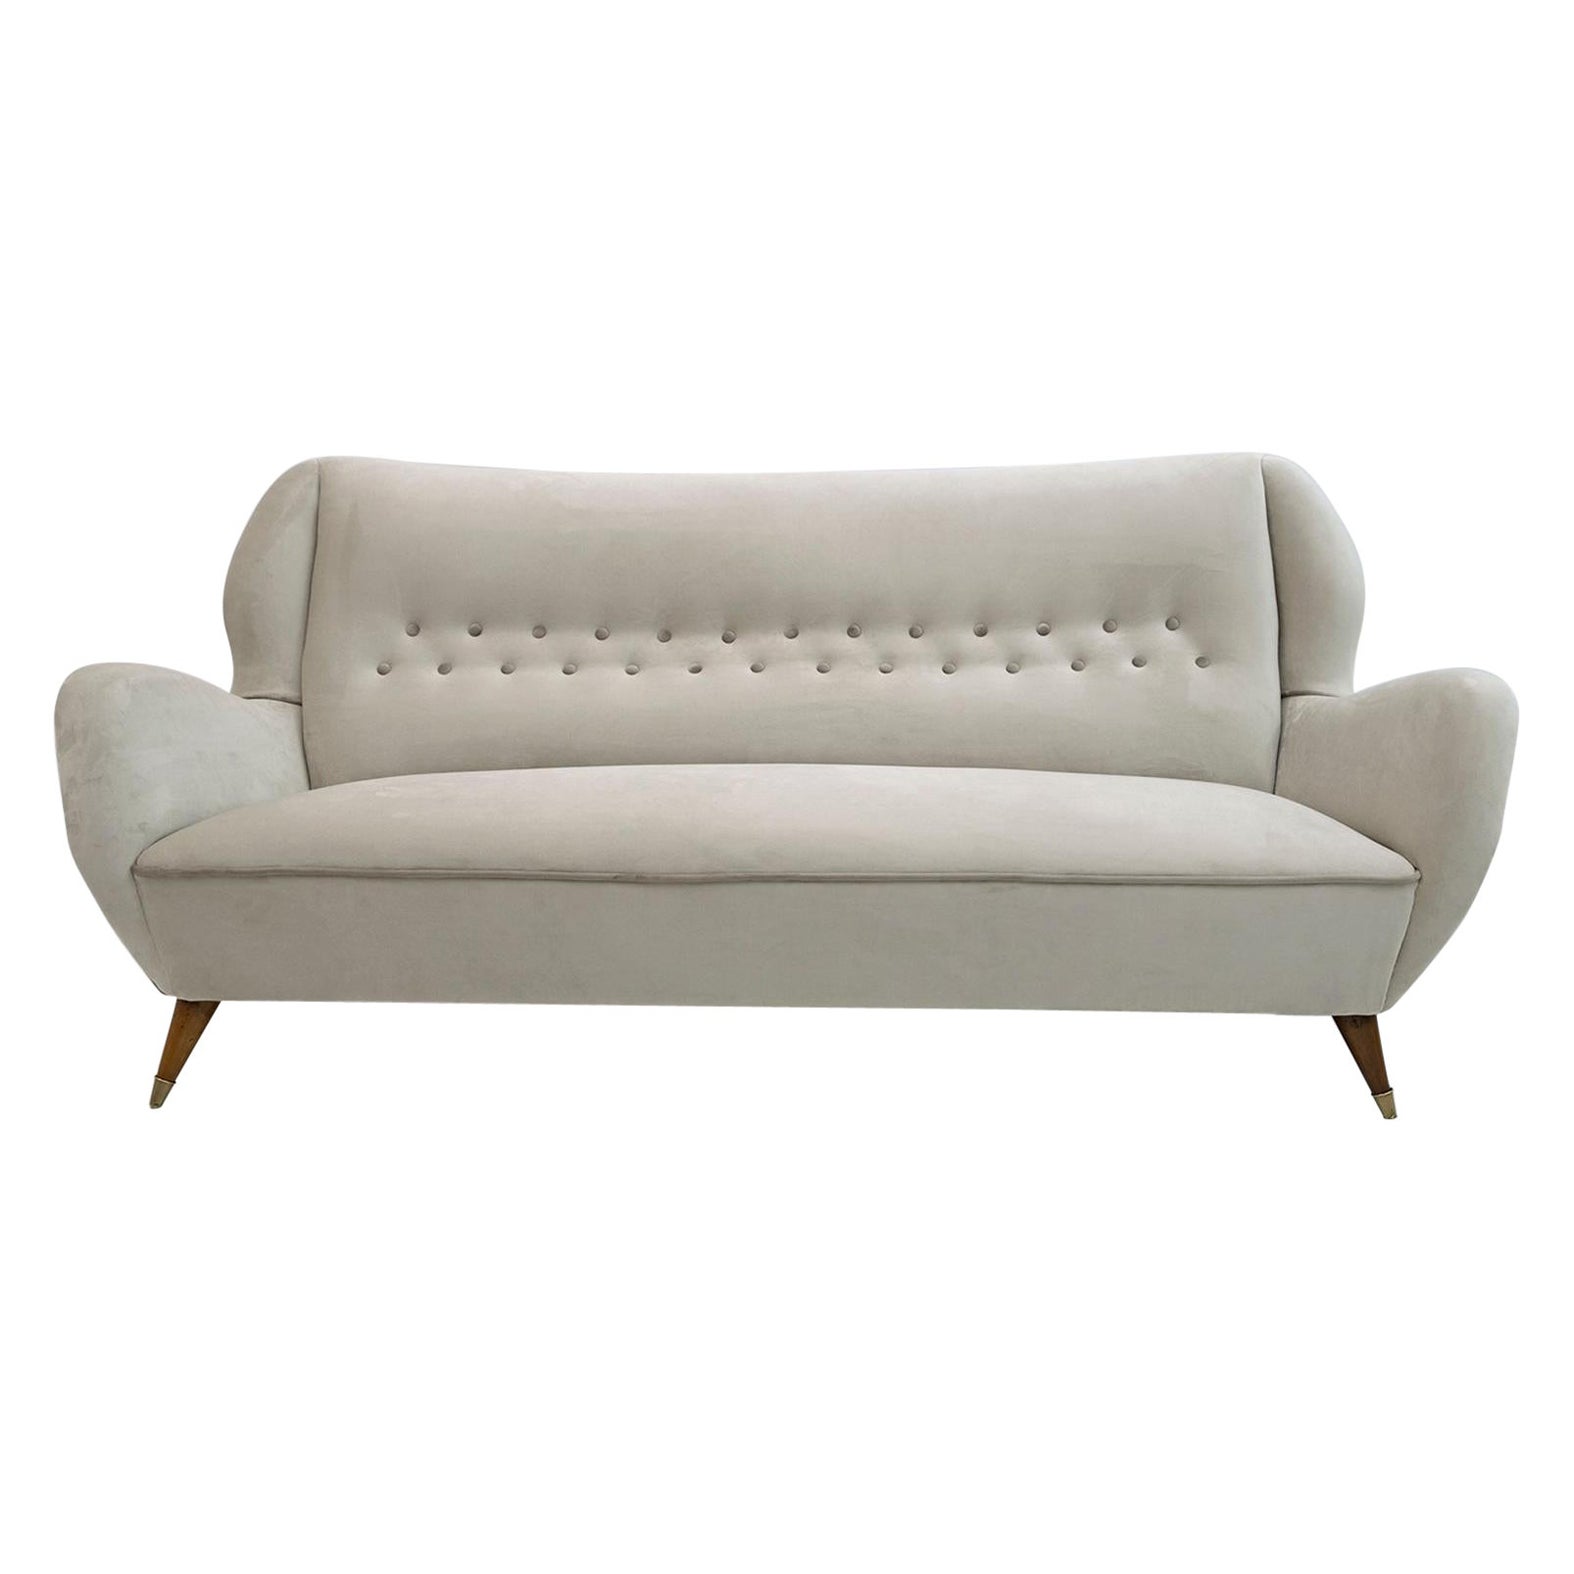 Attributed Gio Ponti Mid-Century Modern Velvet Sofa for ISA, 1950s